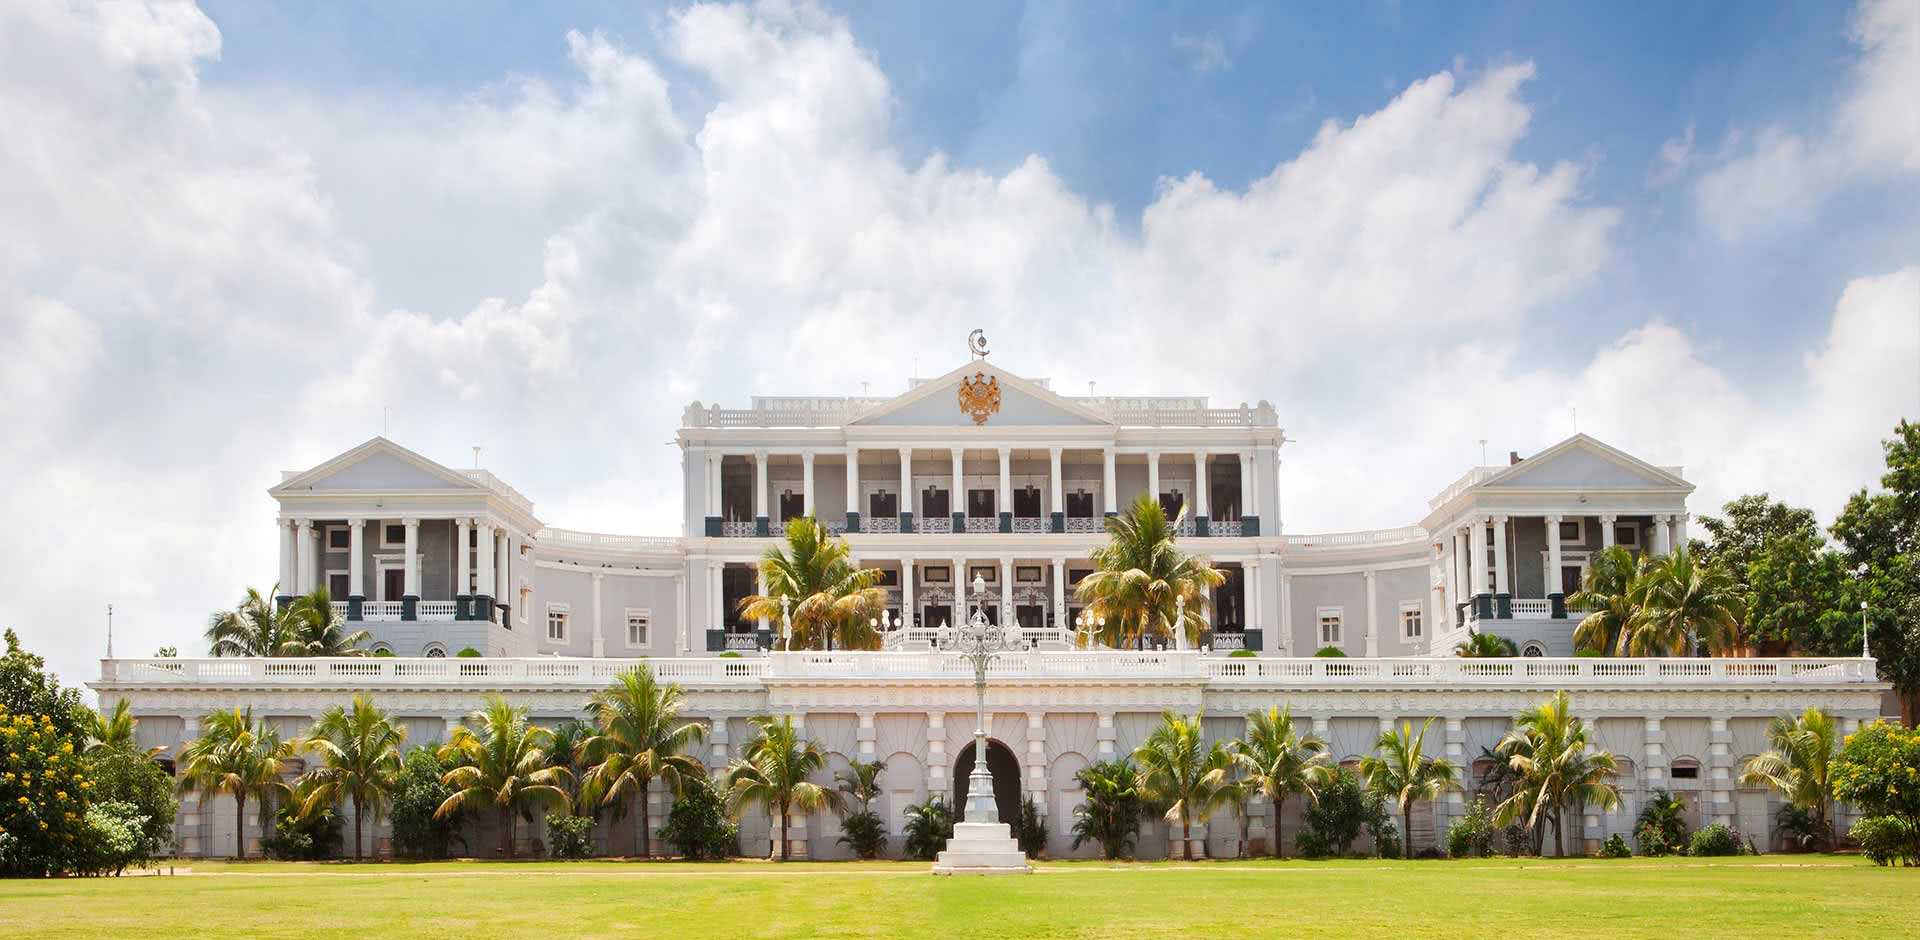  Taj Faluknama Palace